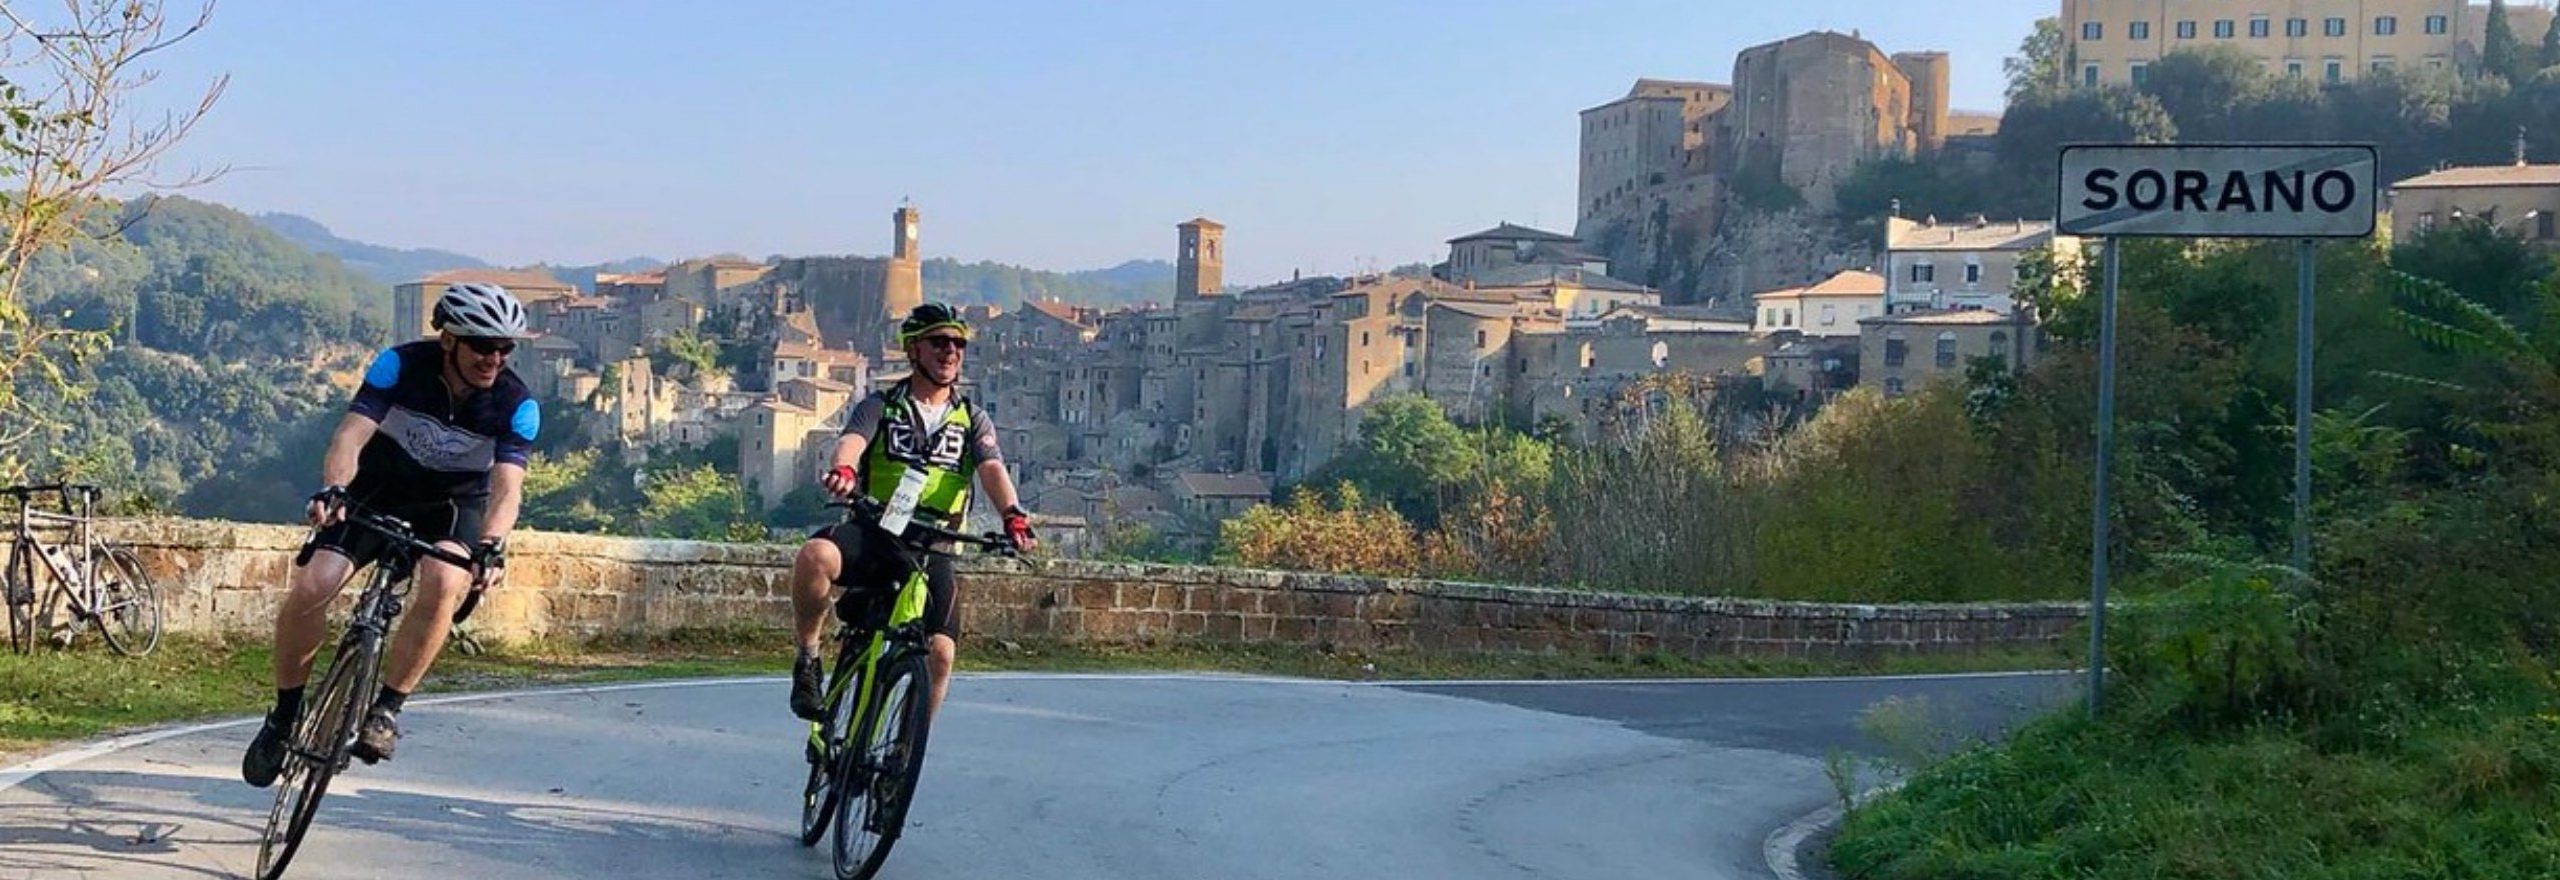 Tuscany bicycle tour